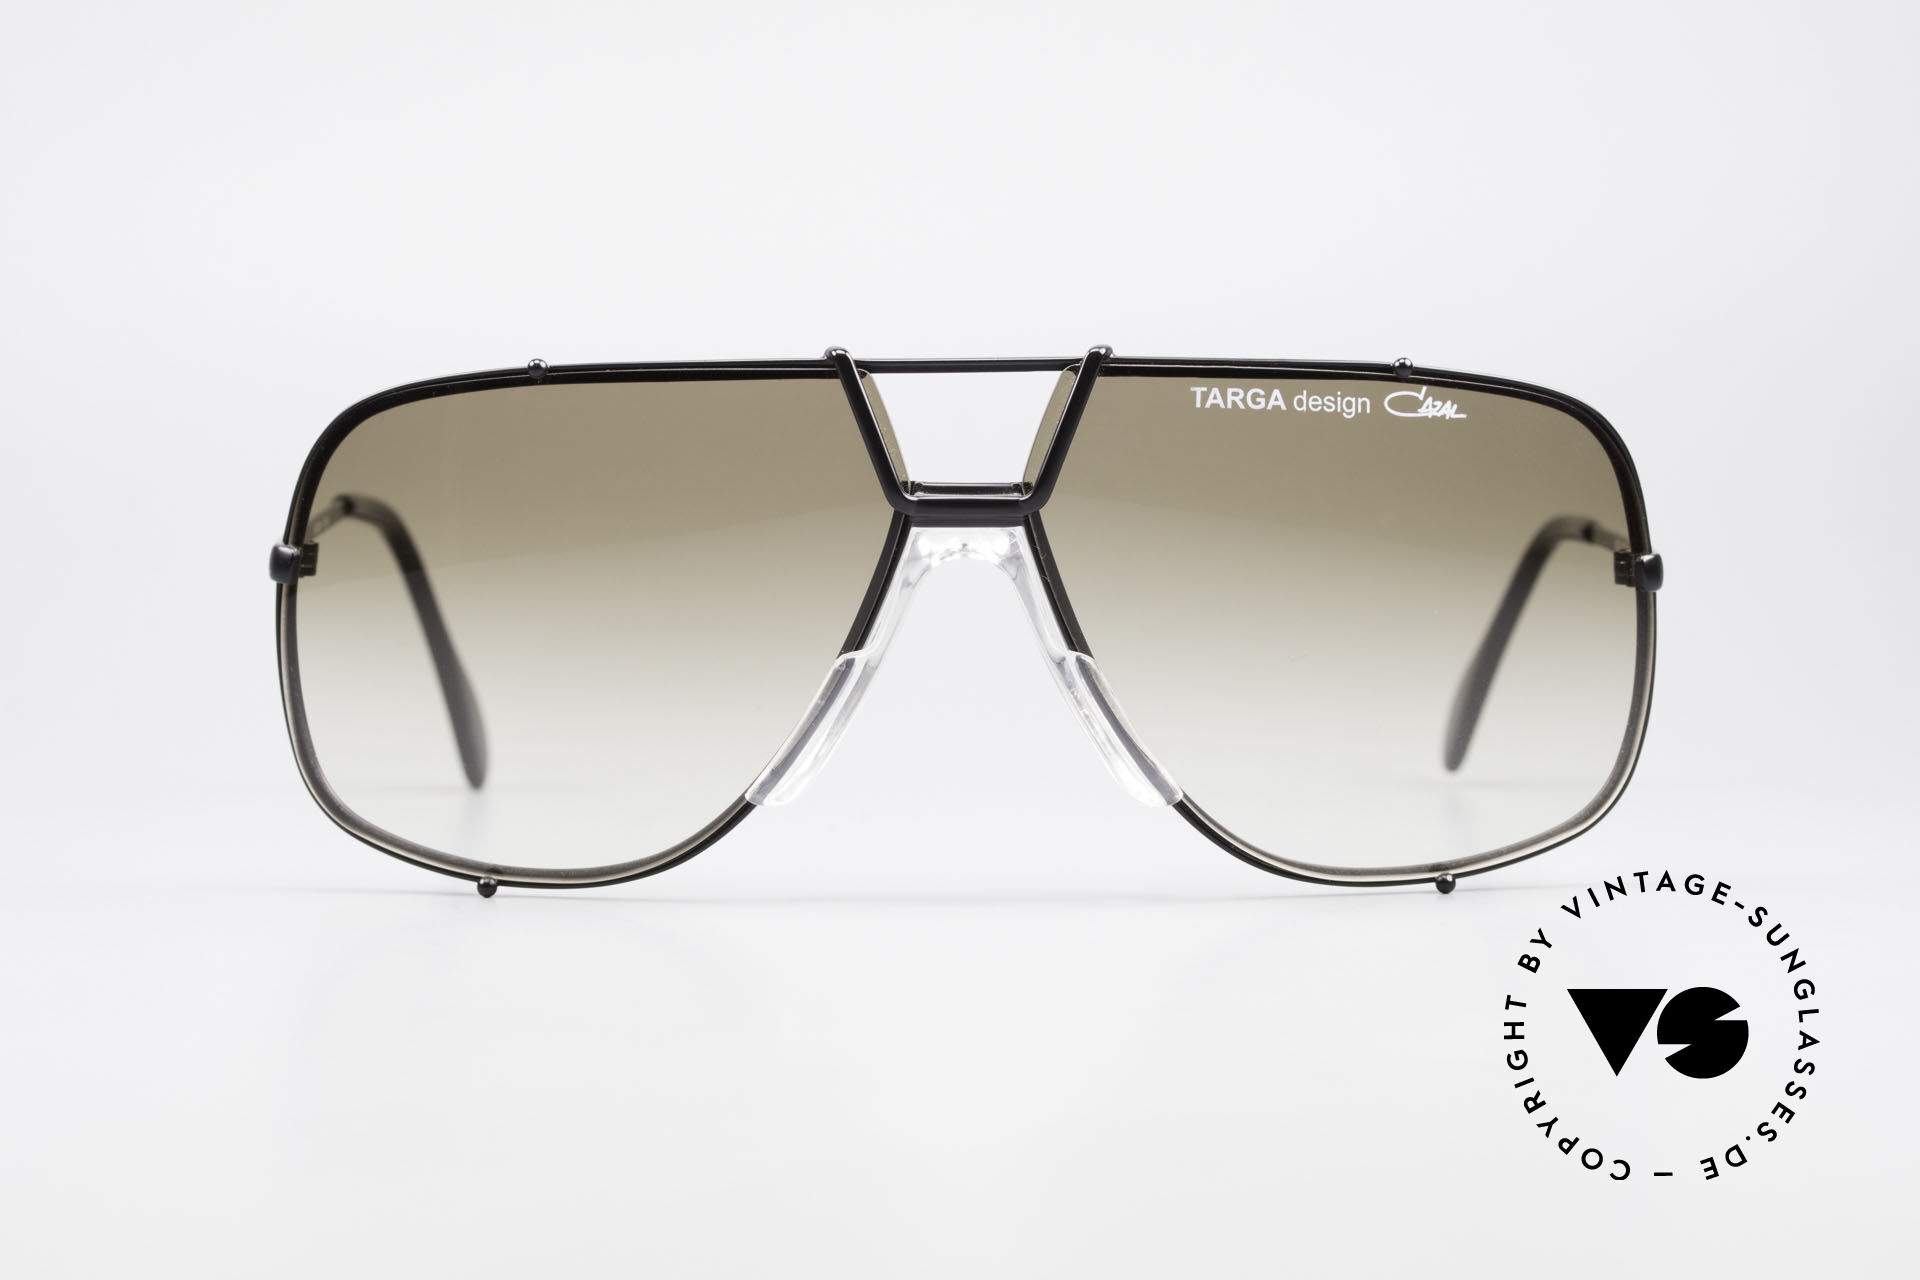 Sunglasses Cazal 902 Targa Design Legends Aviator Sunglasses